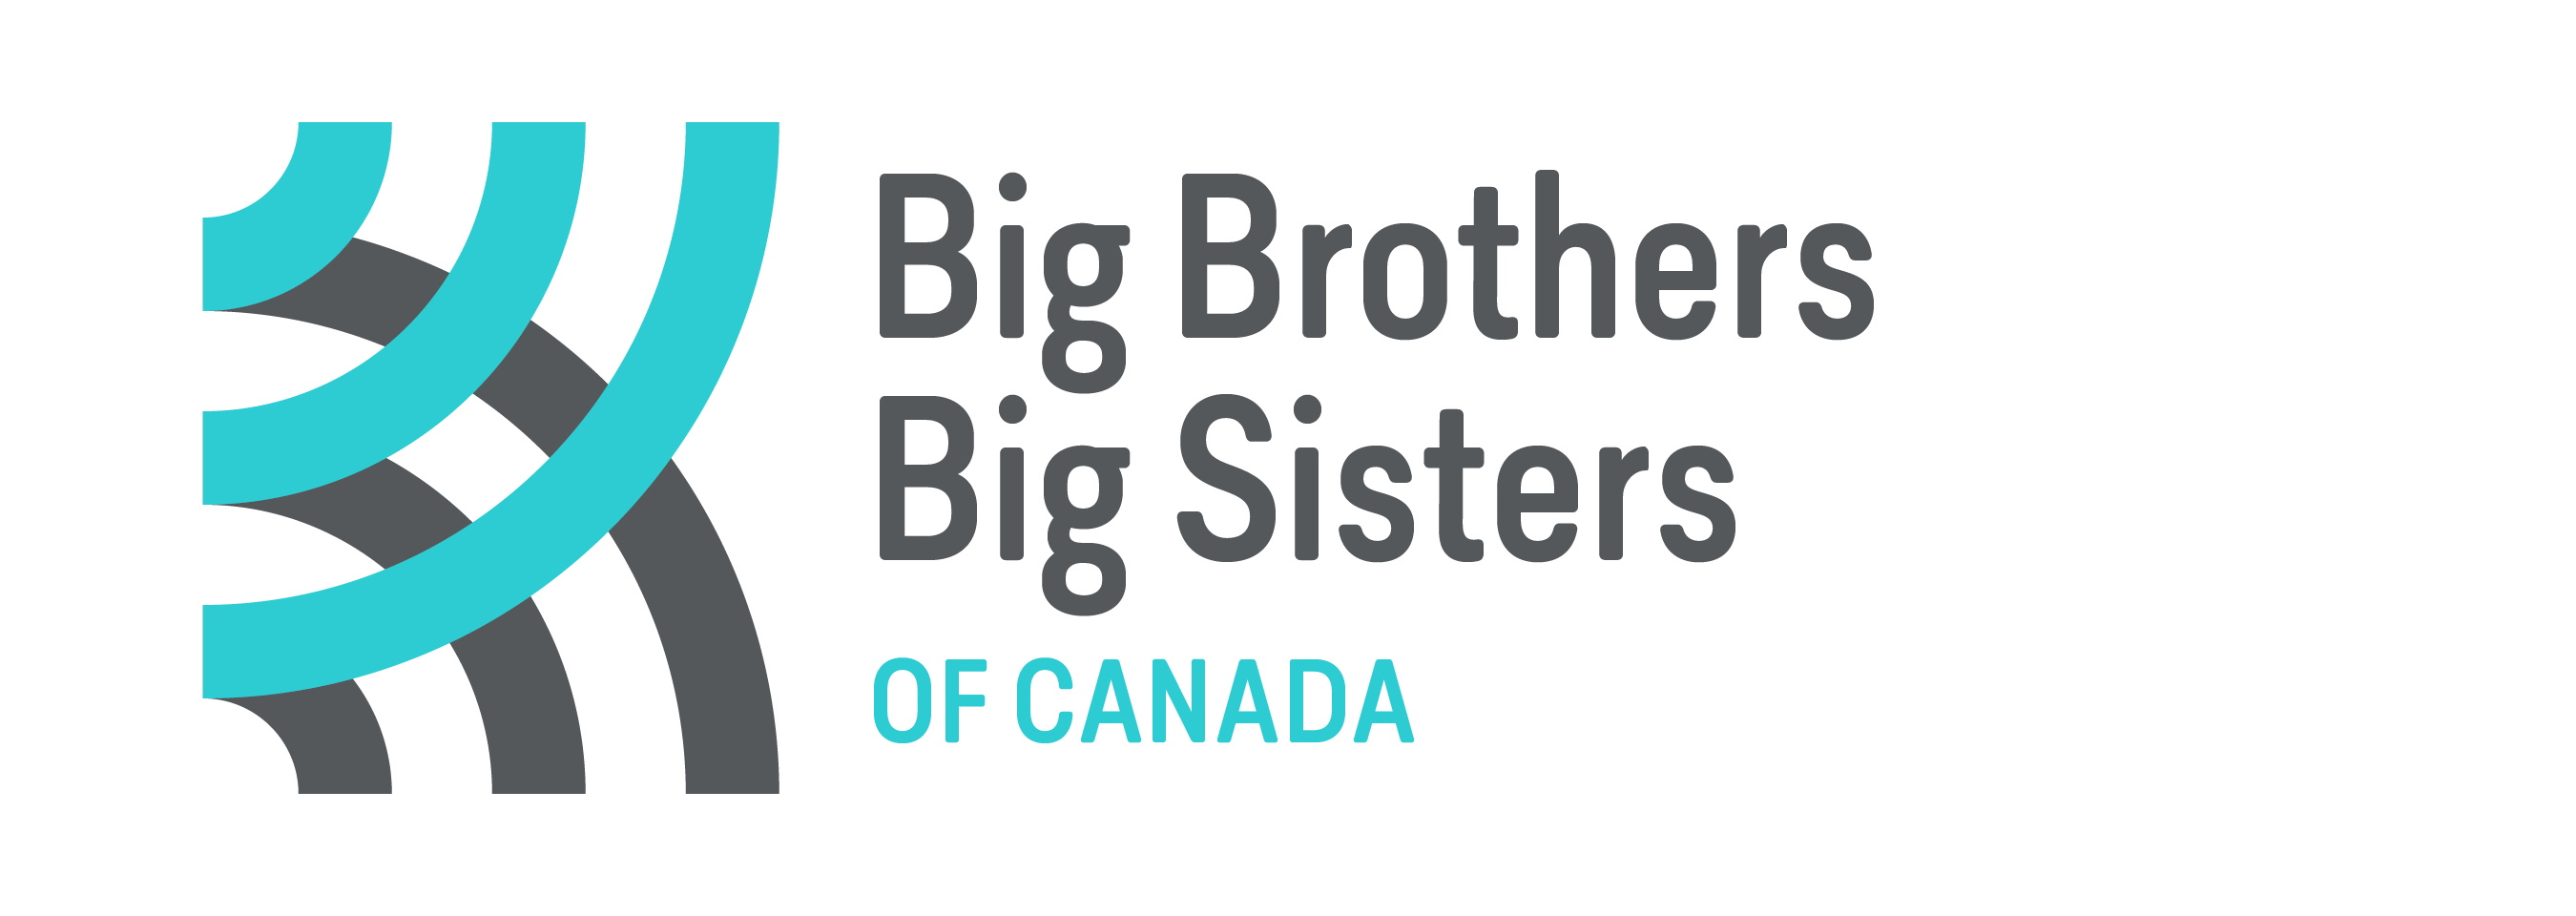 Big Brothers Big Sisters of Canada